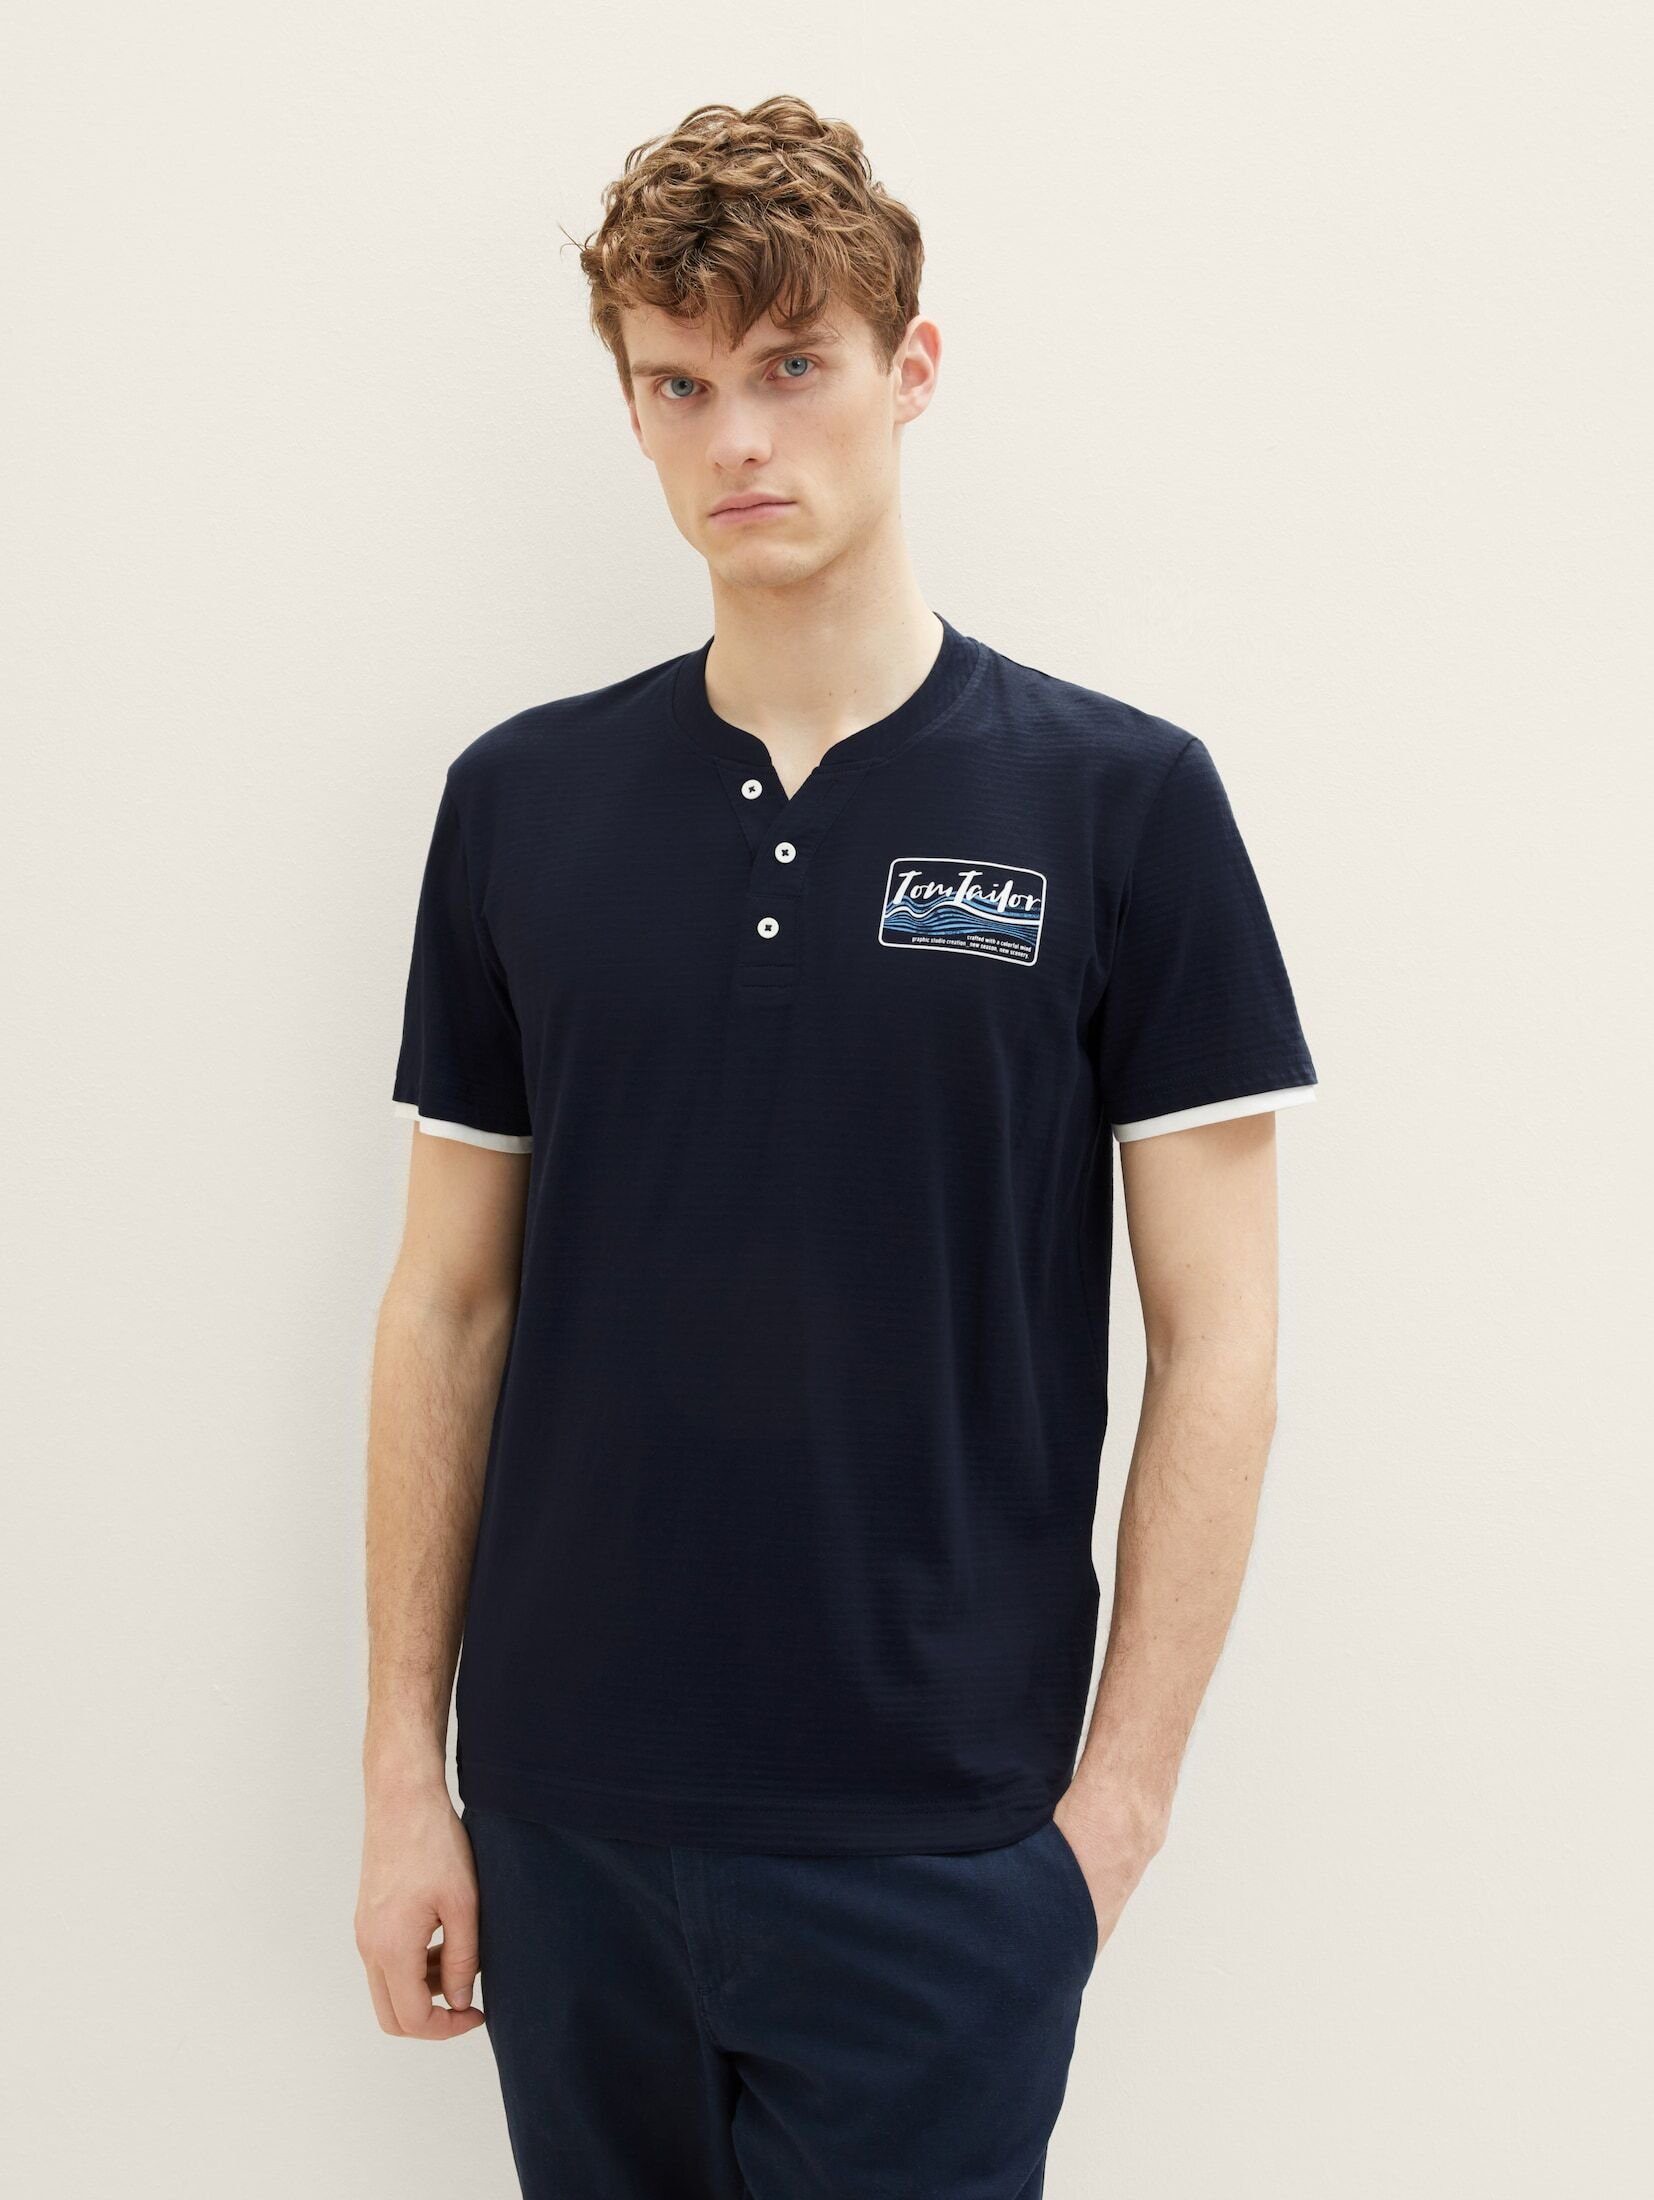 TOM TAILOR T-Shirt Serafinoshirt mit Print sky captain blue